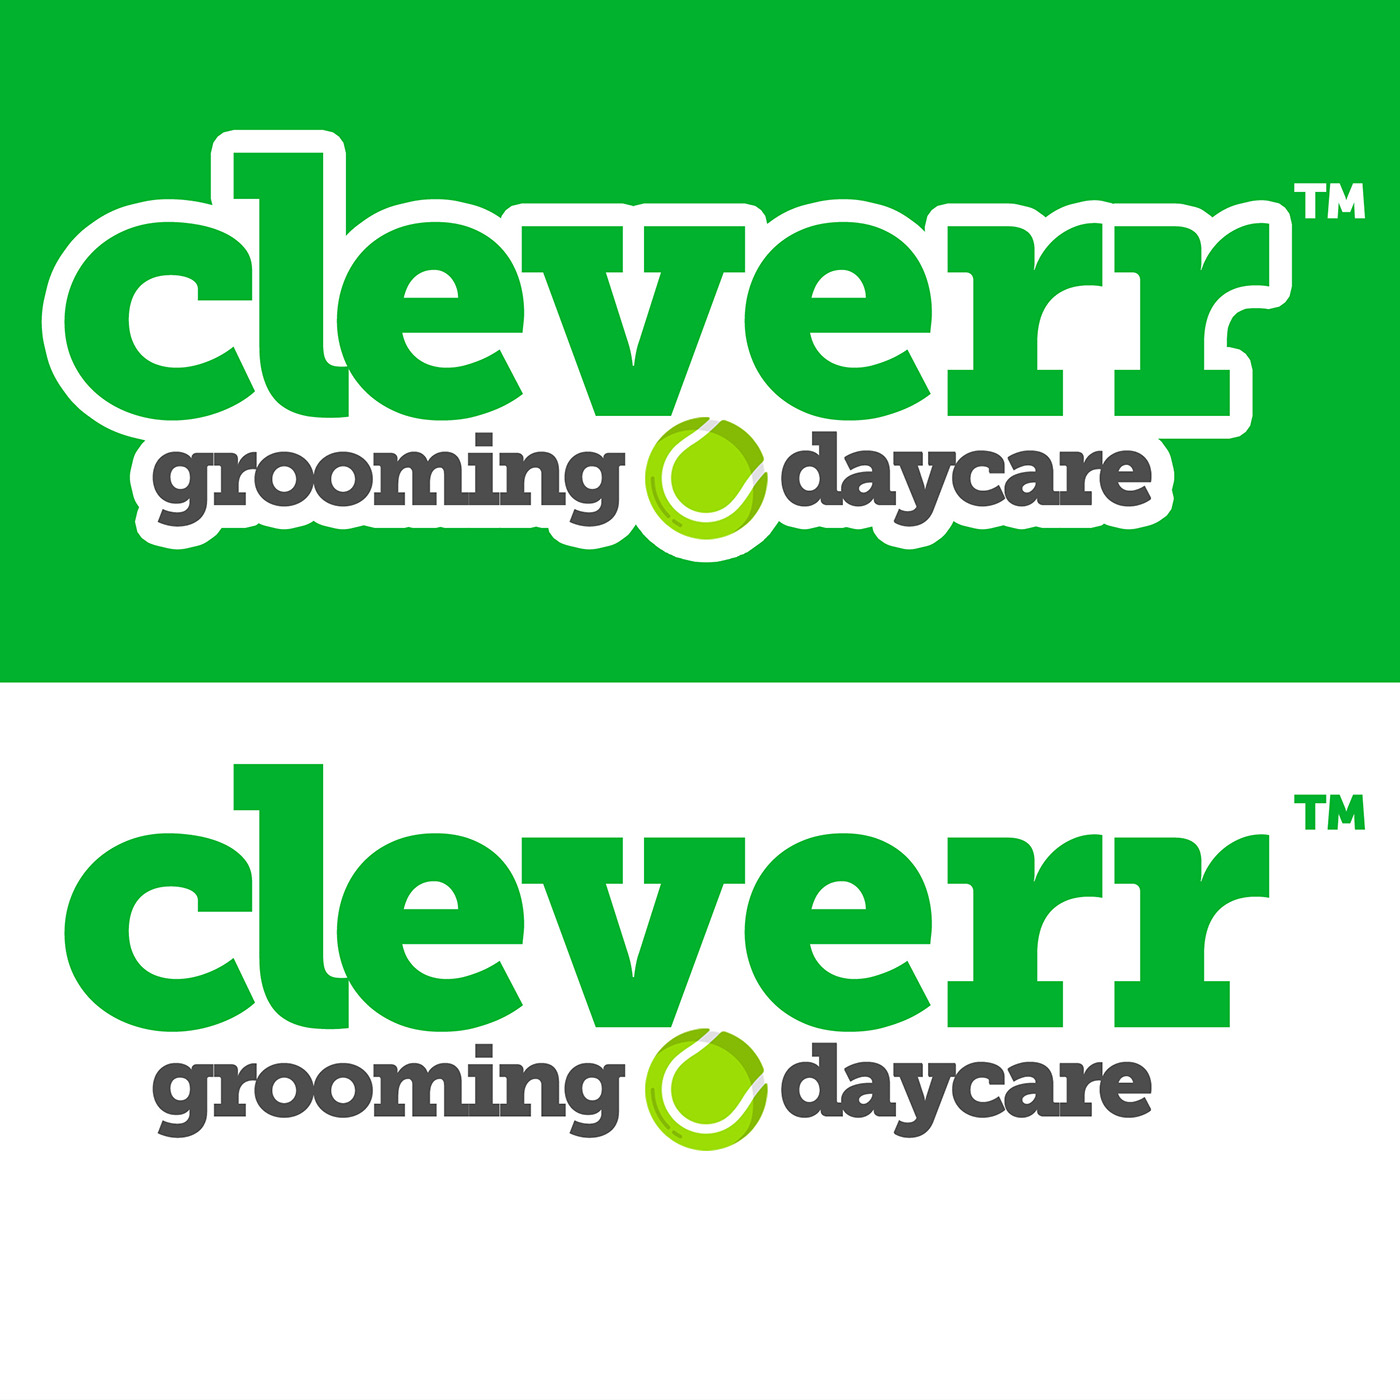 grooming dogs daycare logo branding 